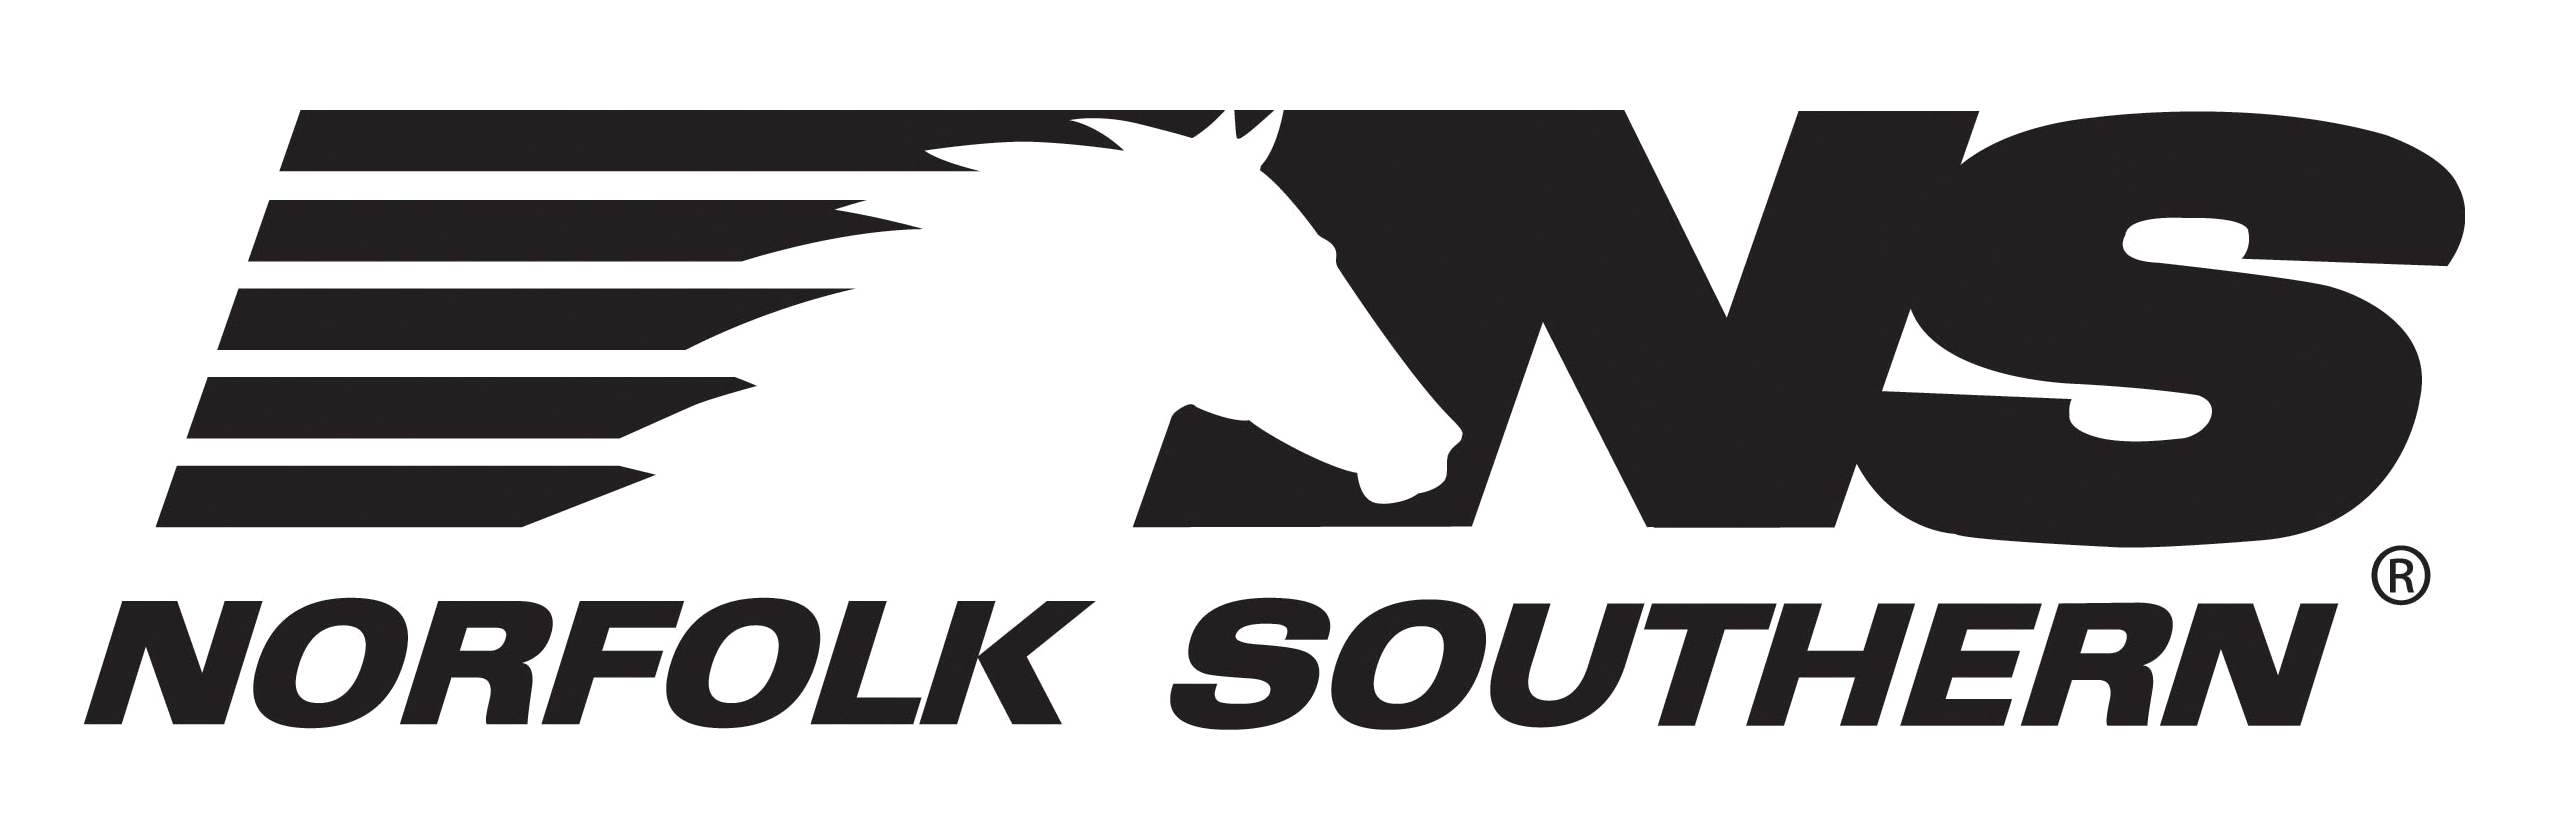 Norfolk Southern Logo PNG Image